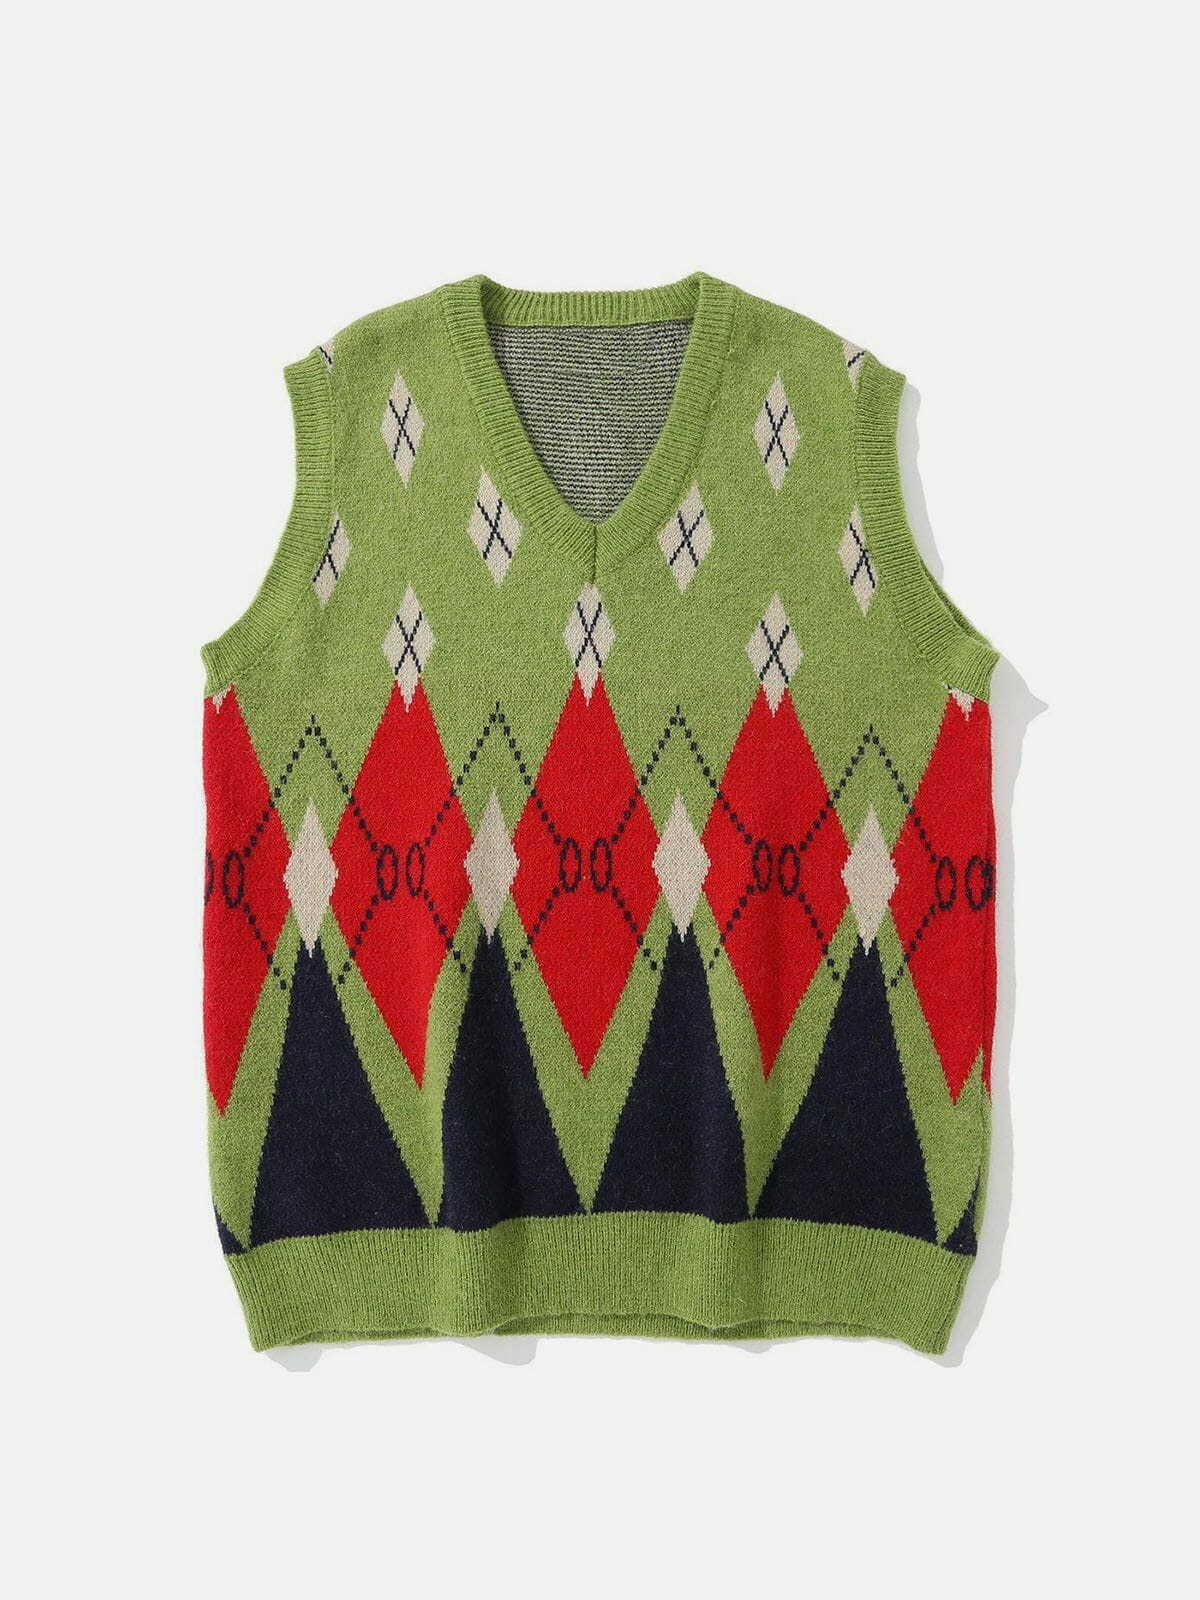 diamond knit sweater vest vintage chic statement 5703